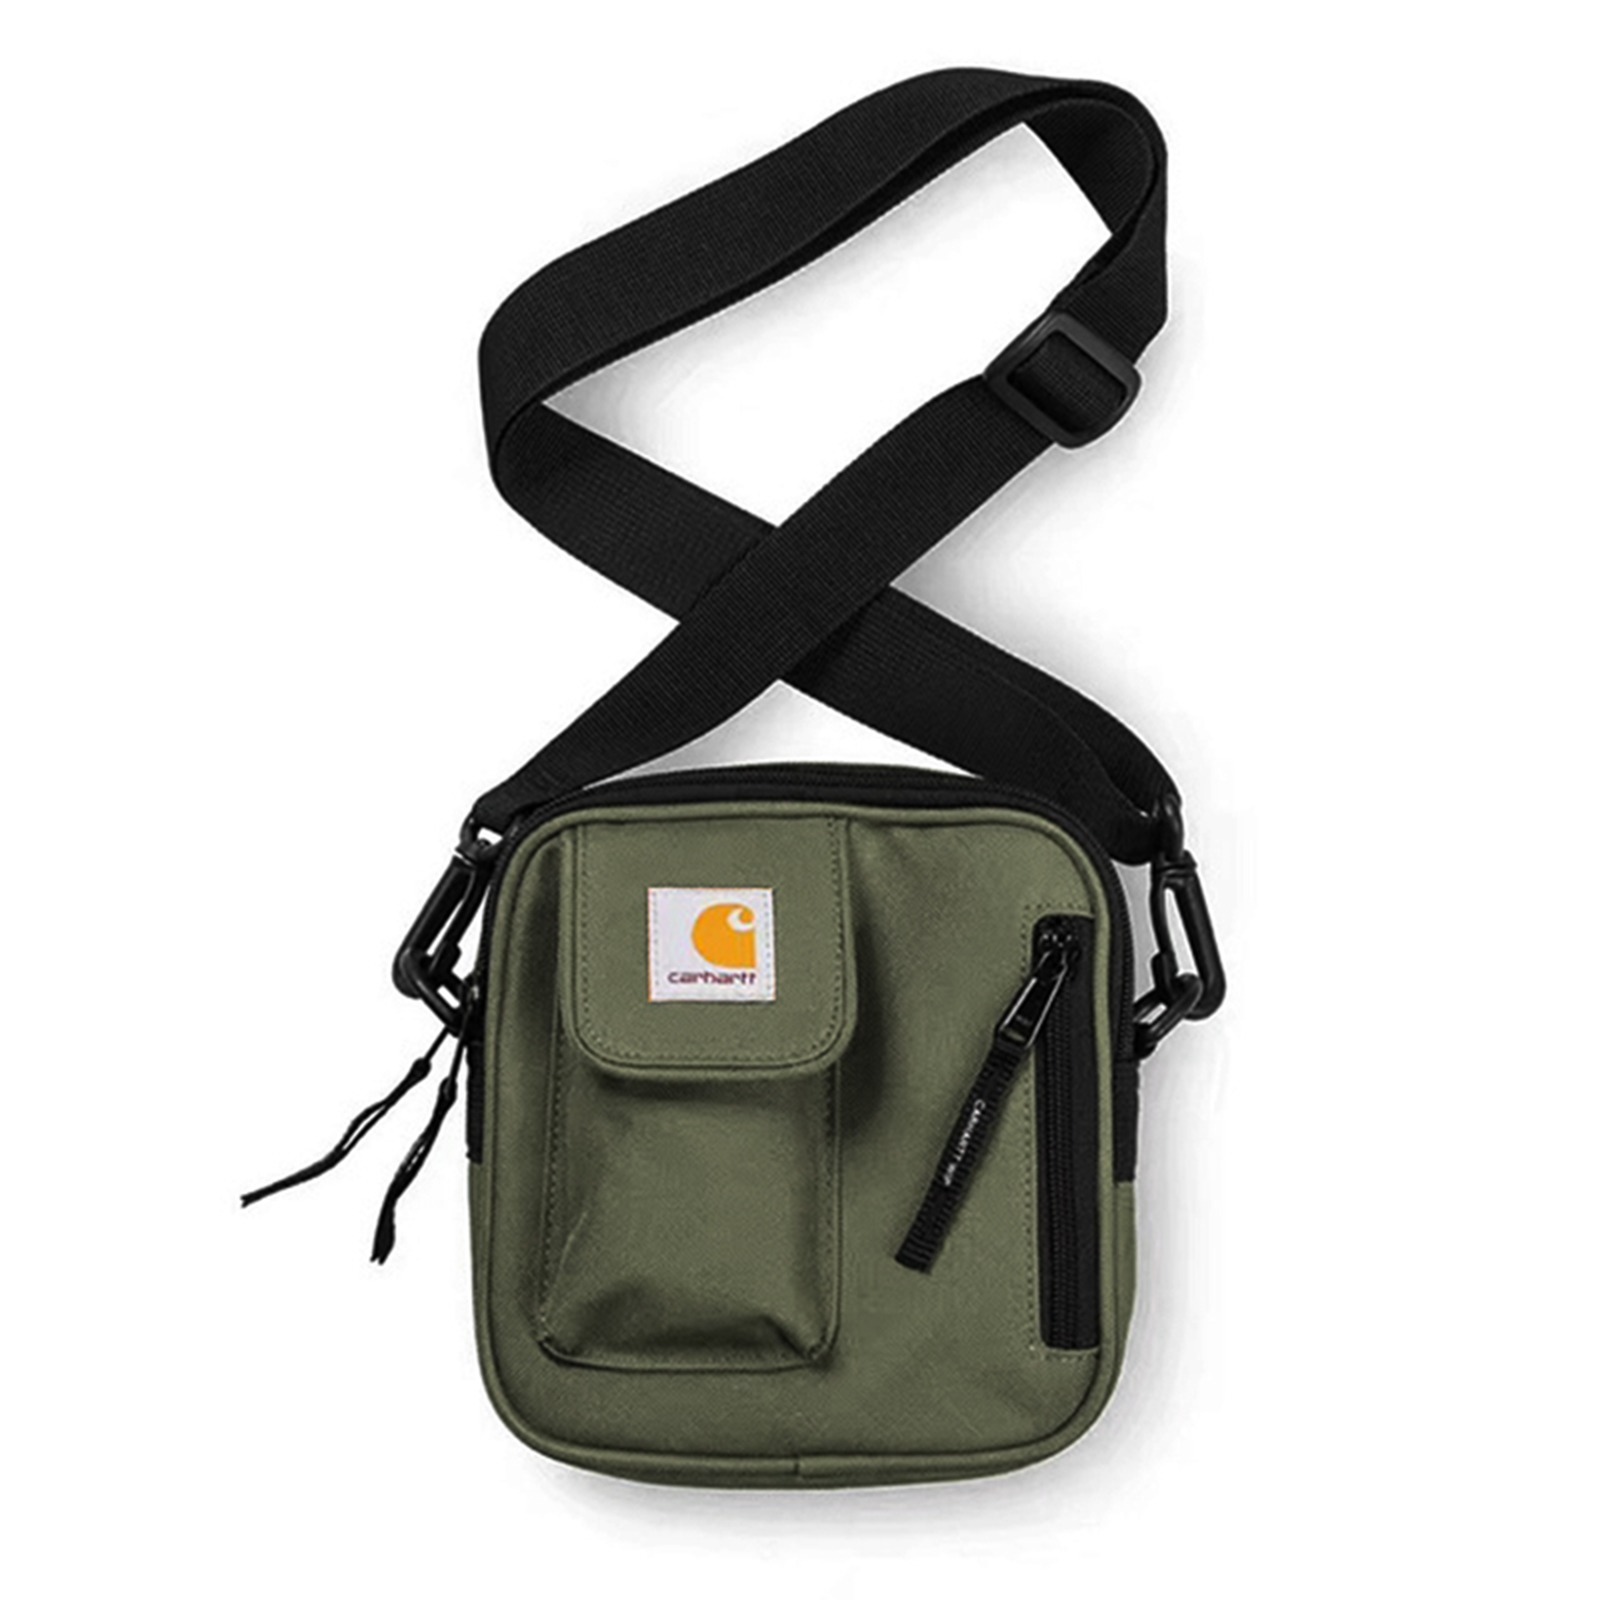 Carhartt сумка через плечо. Сумка Carhartt Essentials Bag. Сумка Carhartt WIP Essentials Bag small. Сумка Carhartt Essentials Bag Black. Сумка Carhartt кросс боди.